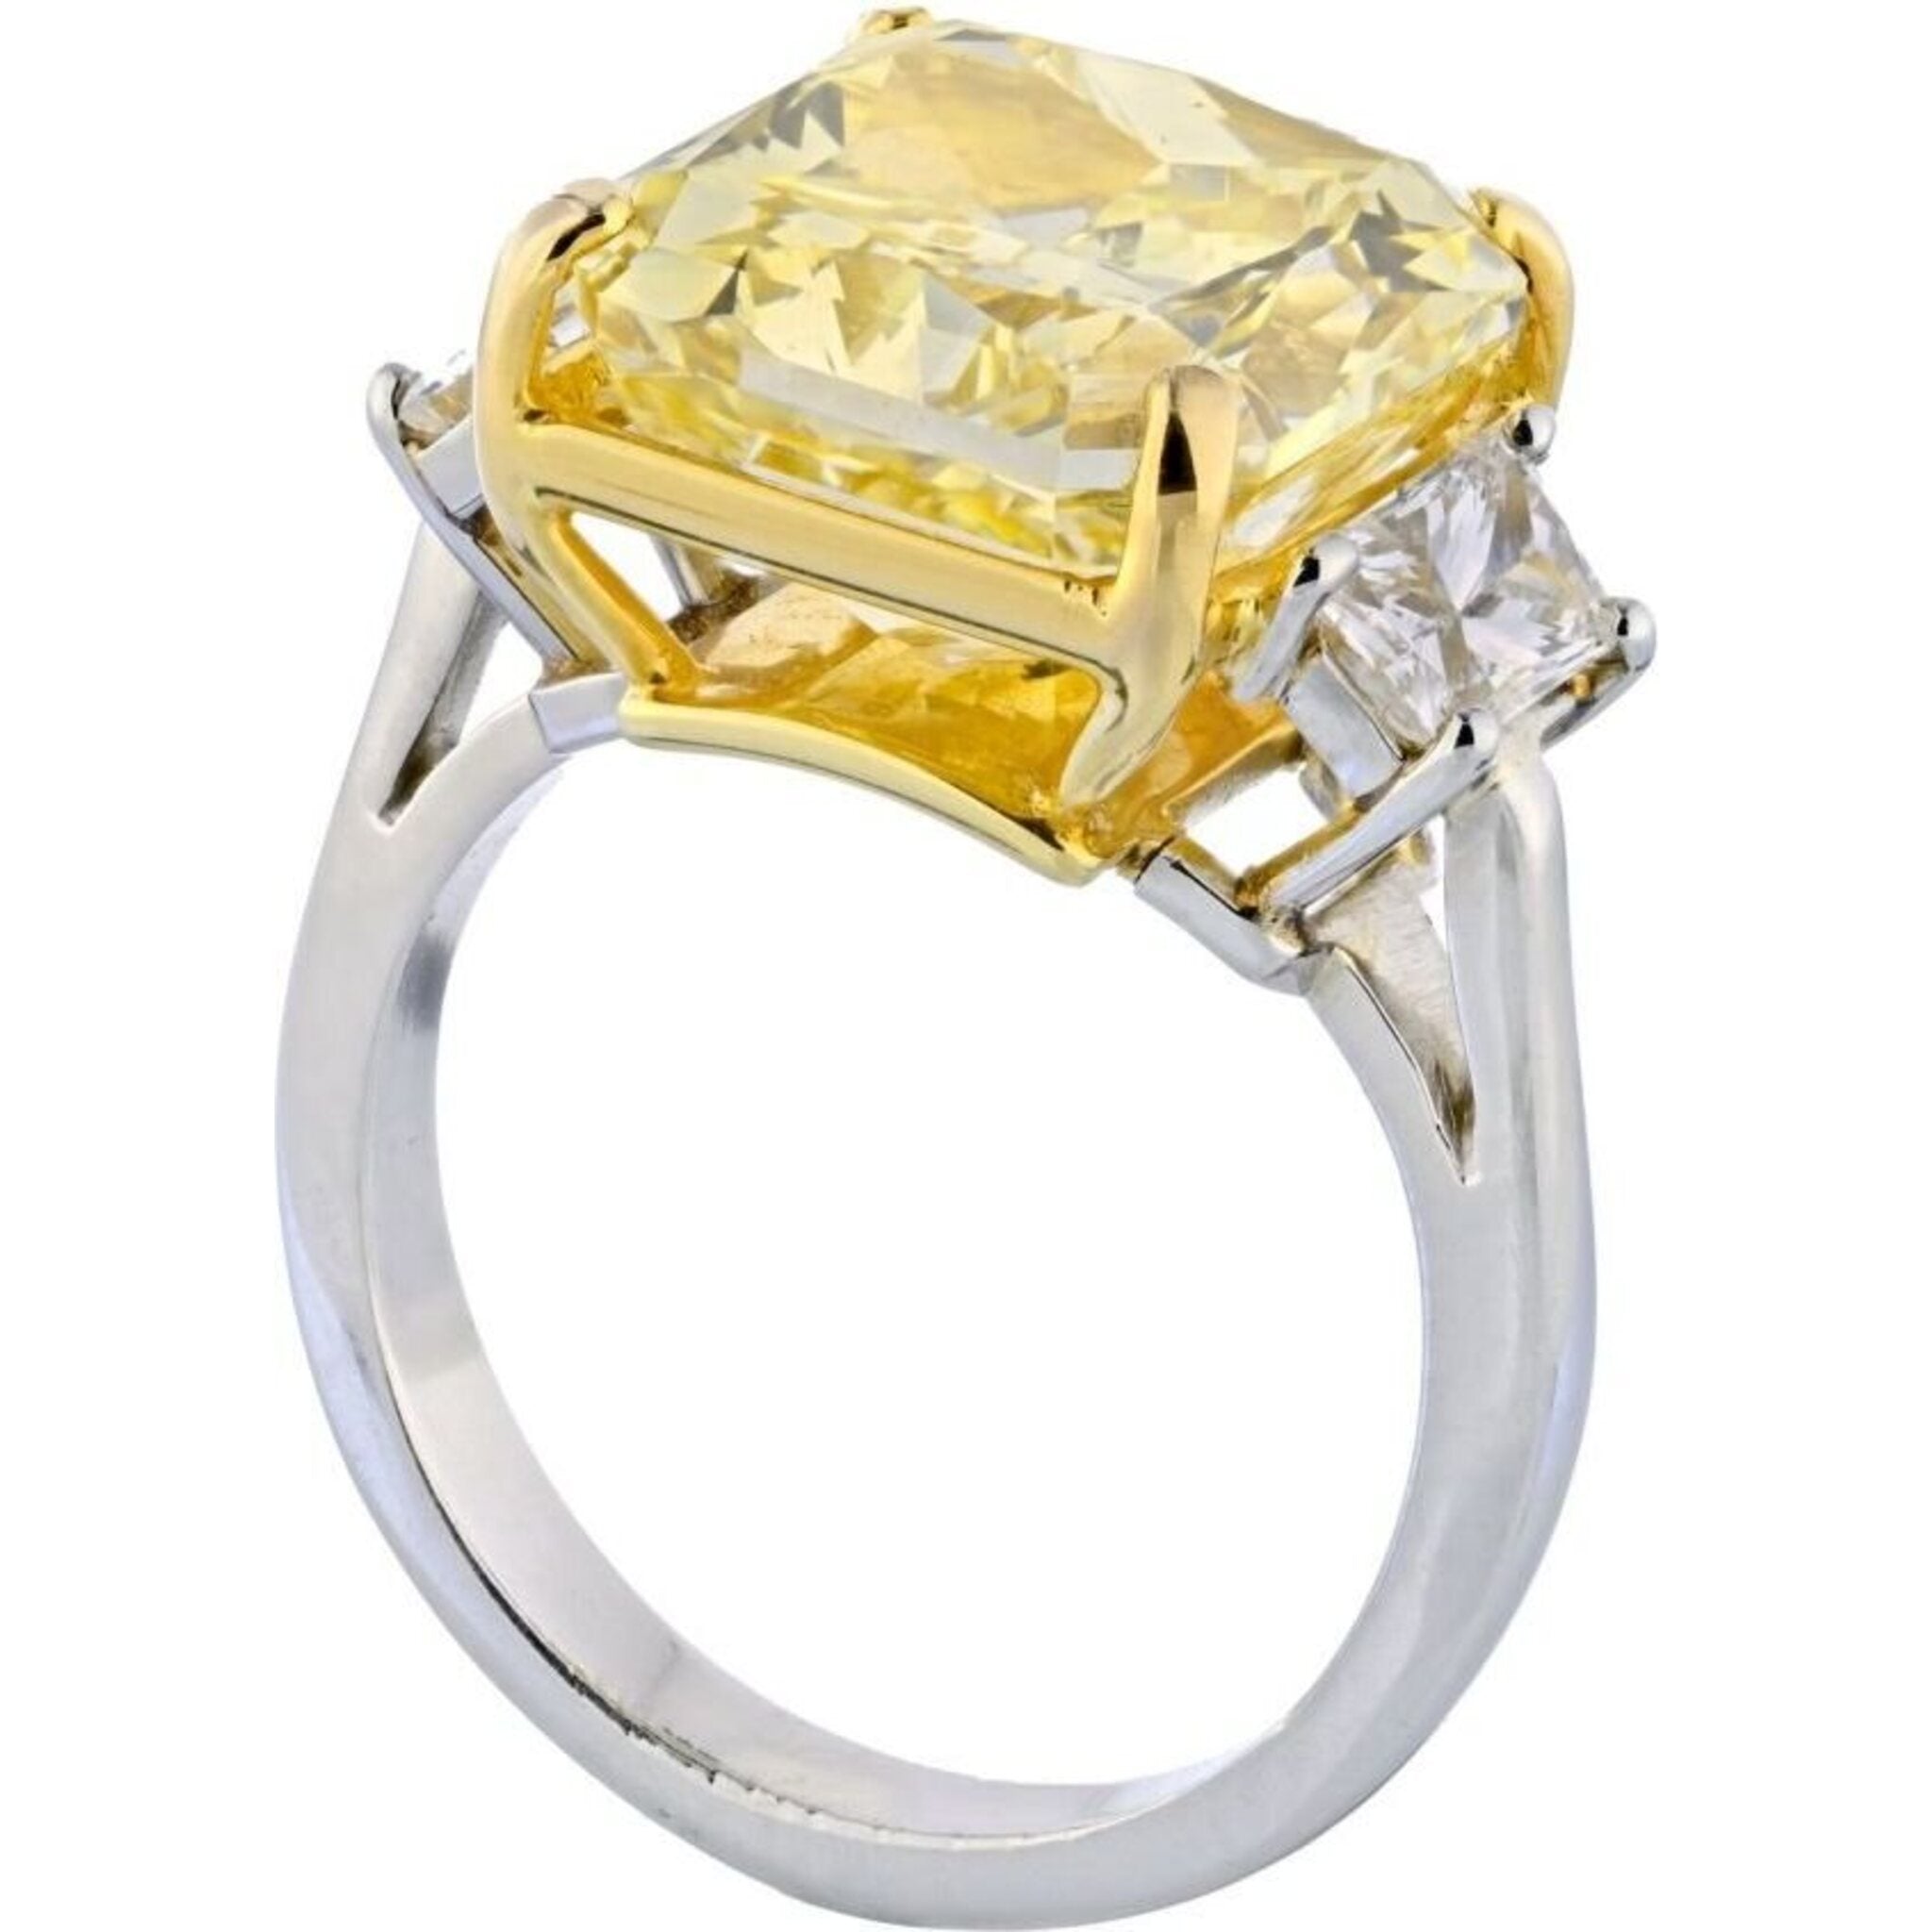 10 Carat Radiant Cut Diamond Fancy Intense Yellow GIA Three Stone Engagement Ring